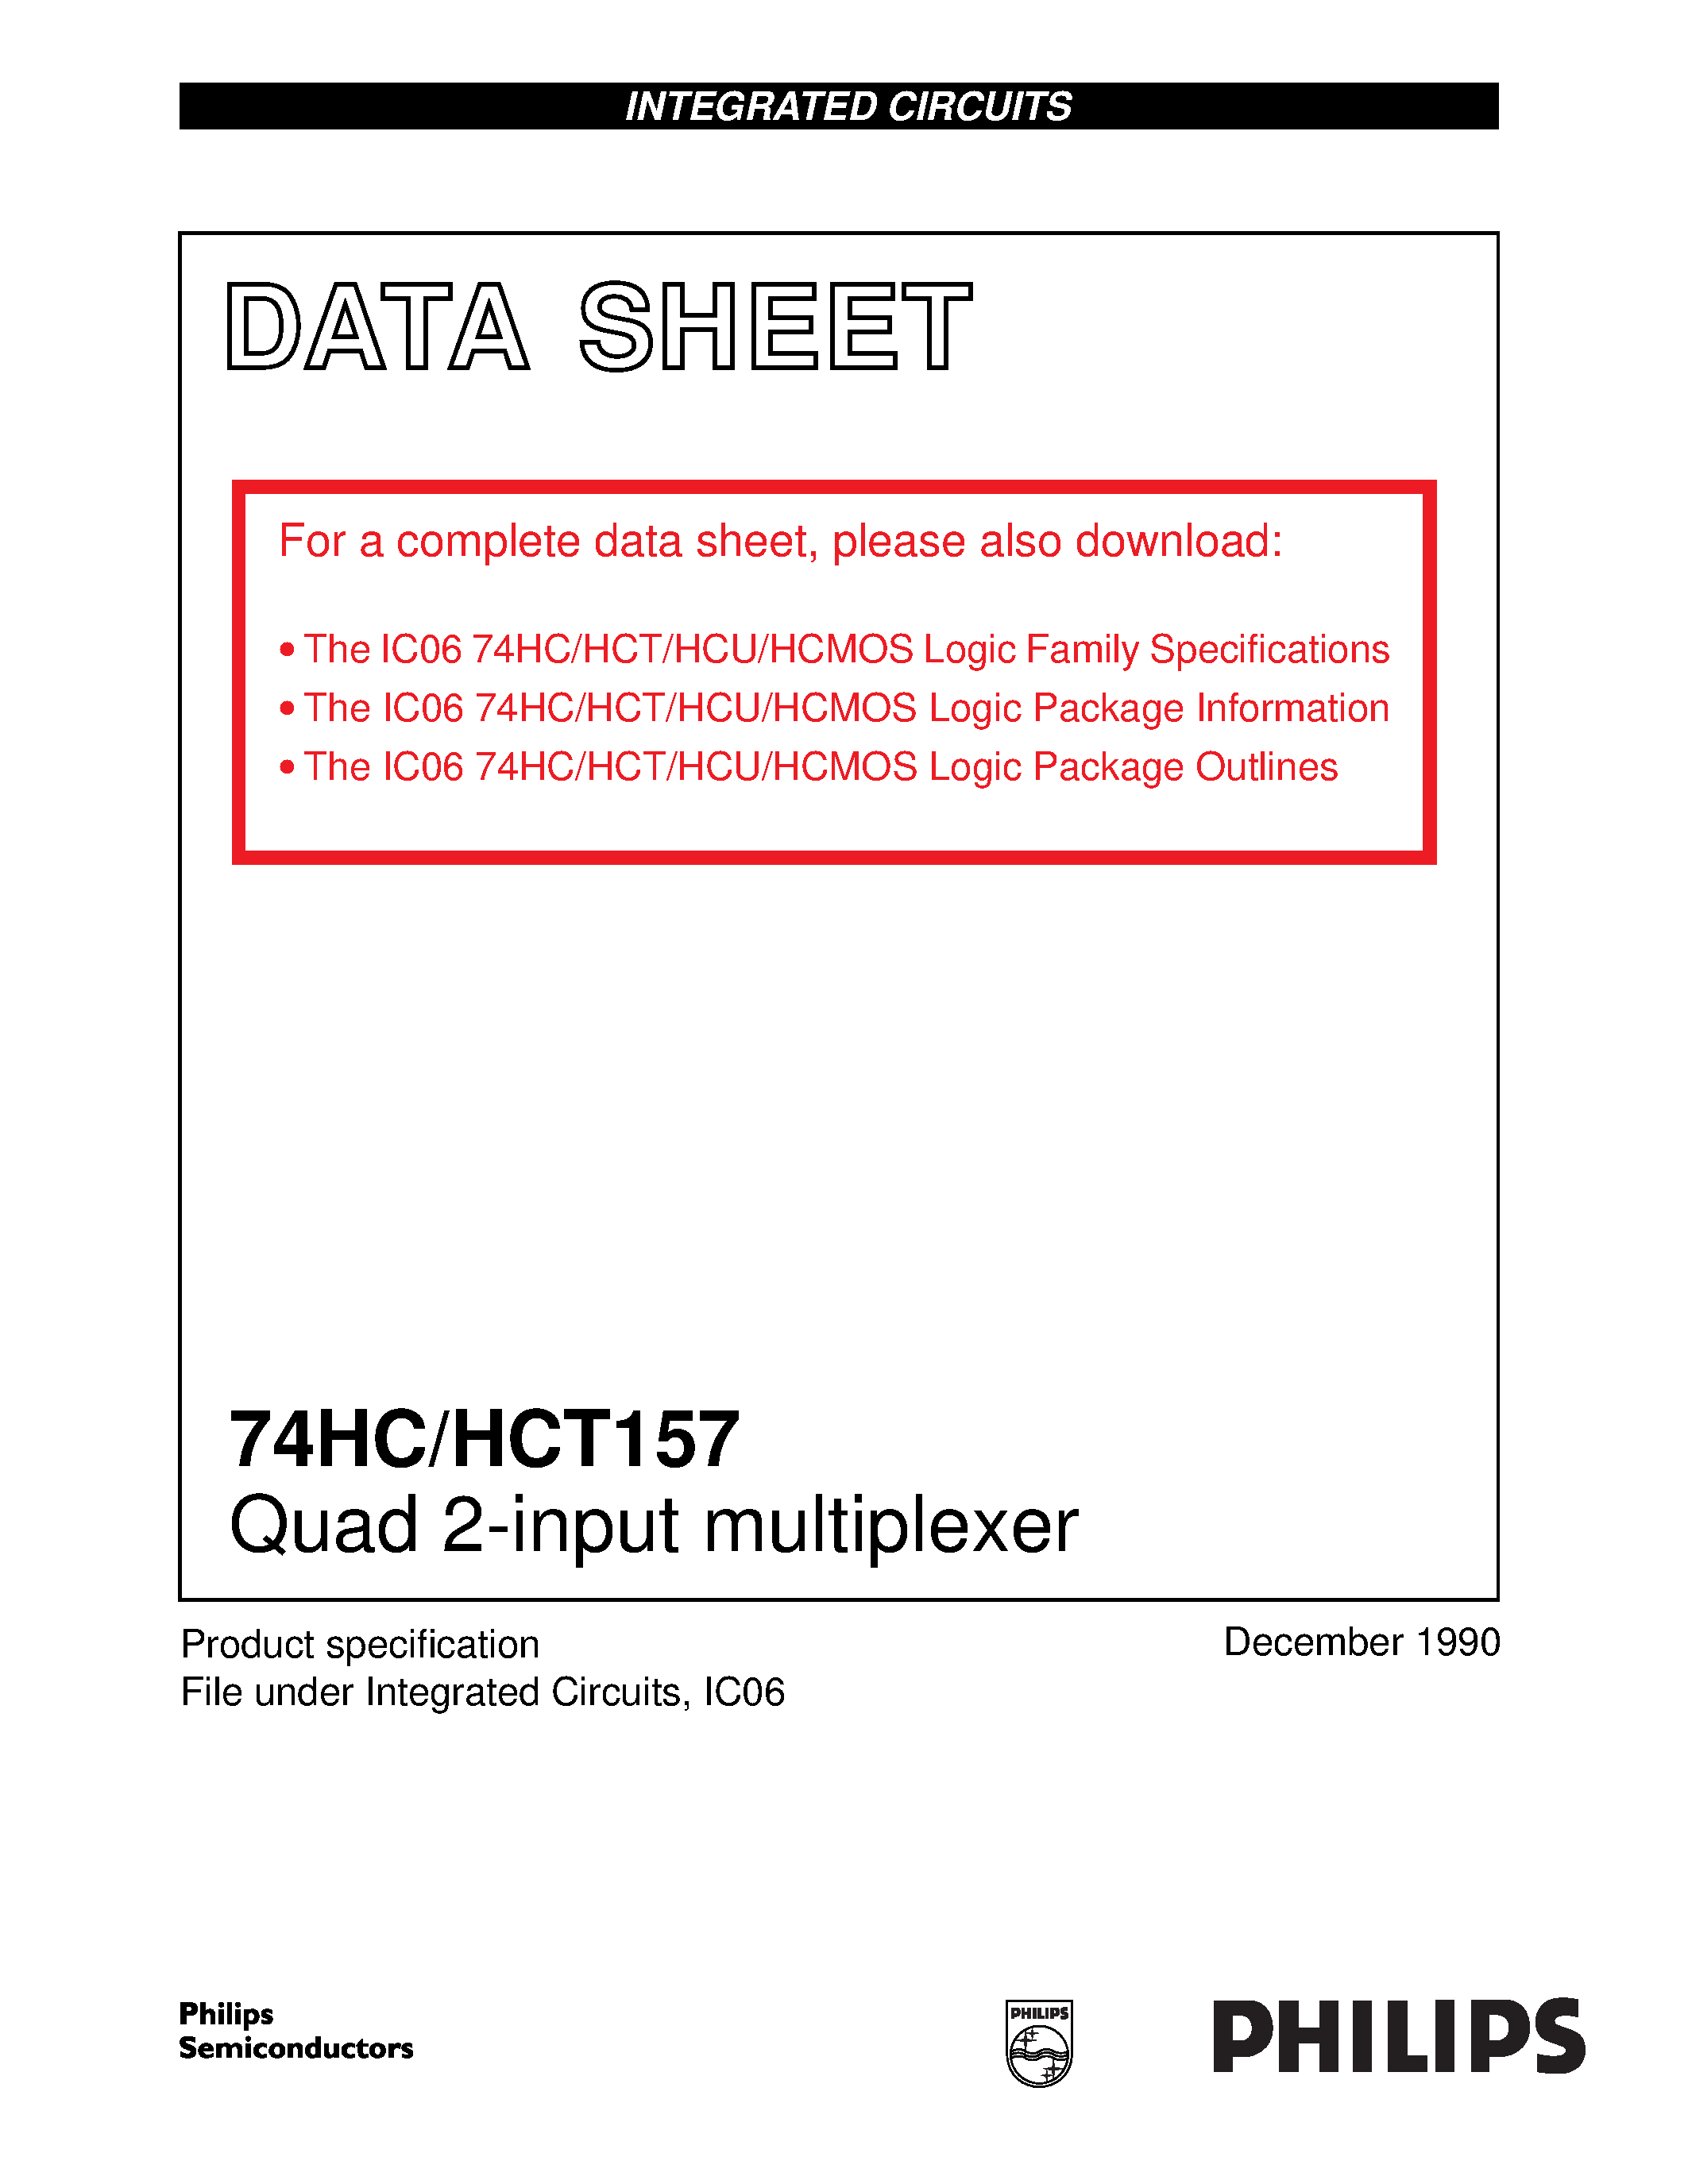 Даташит 74HCT157 - Quad 2-input multiplexer страница 1